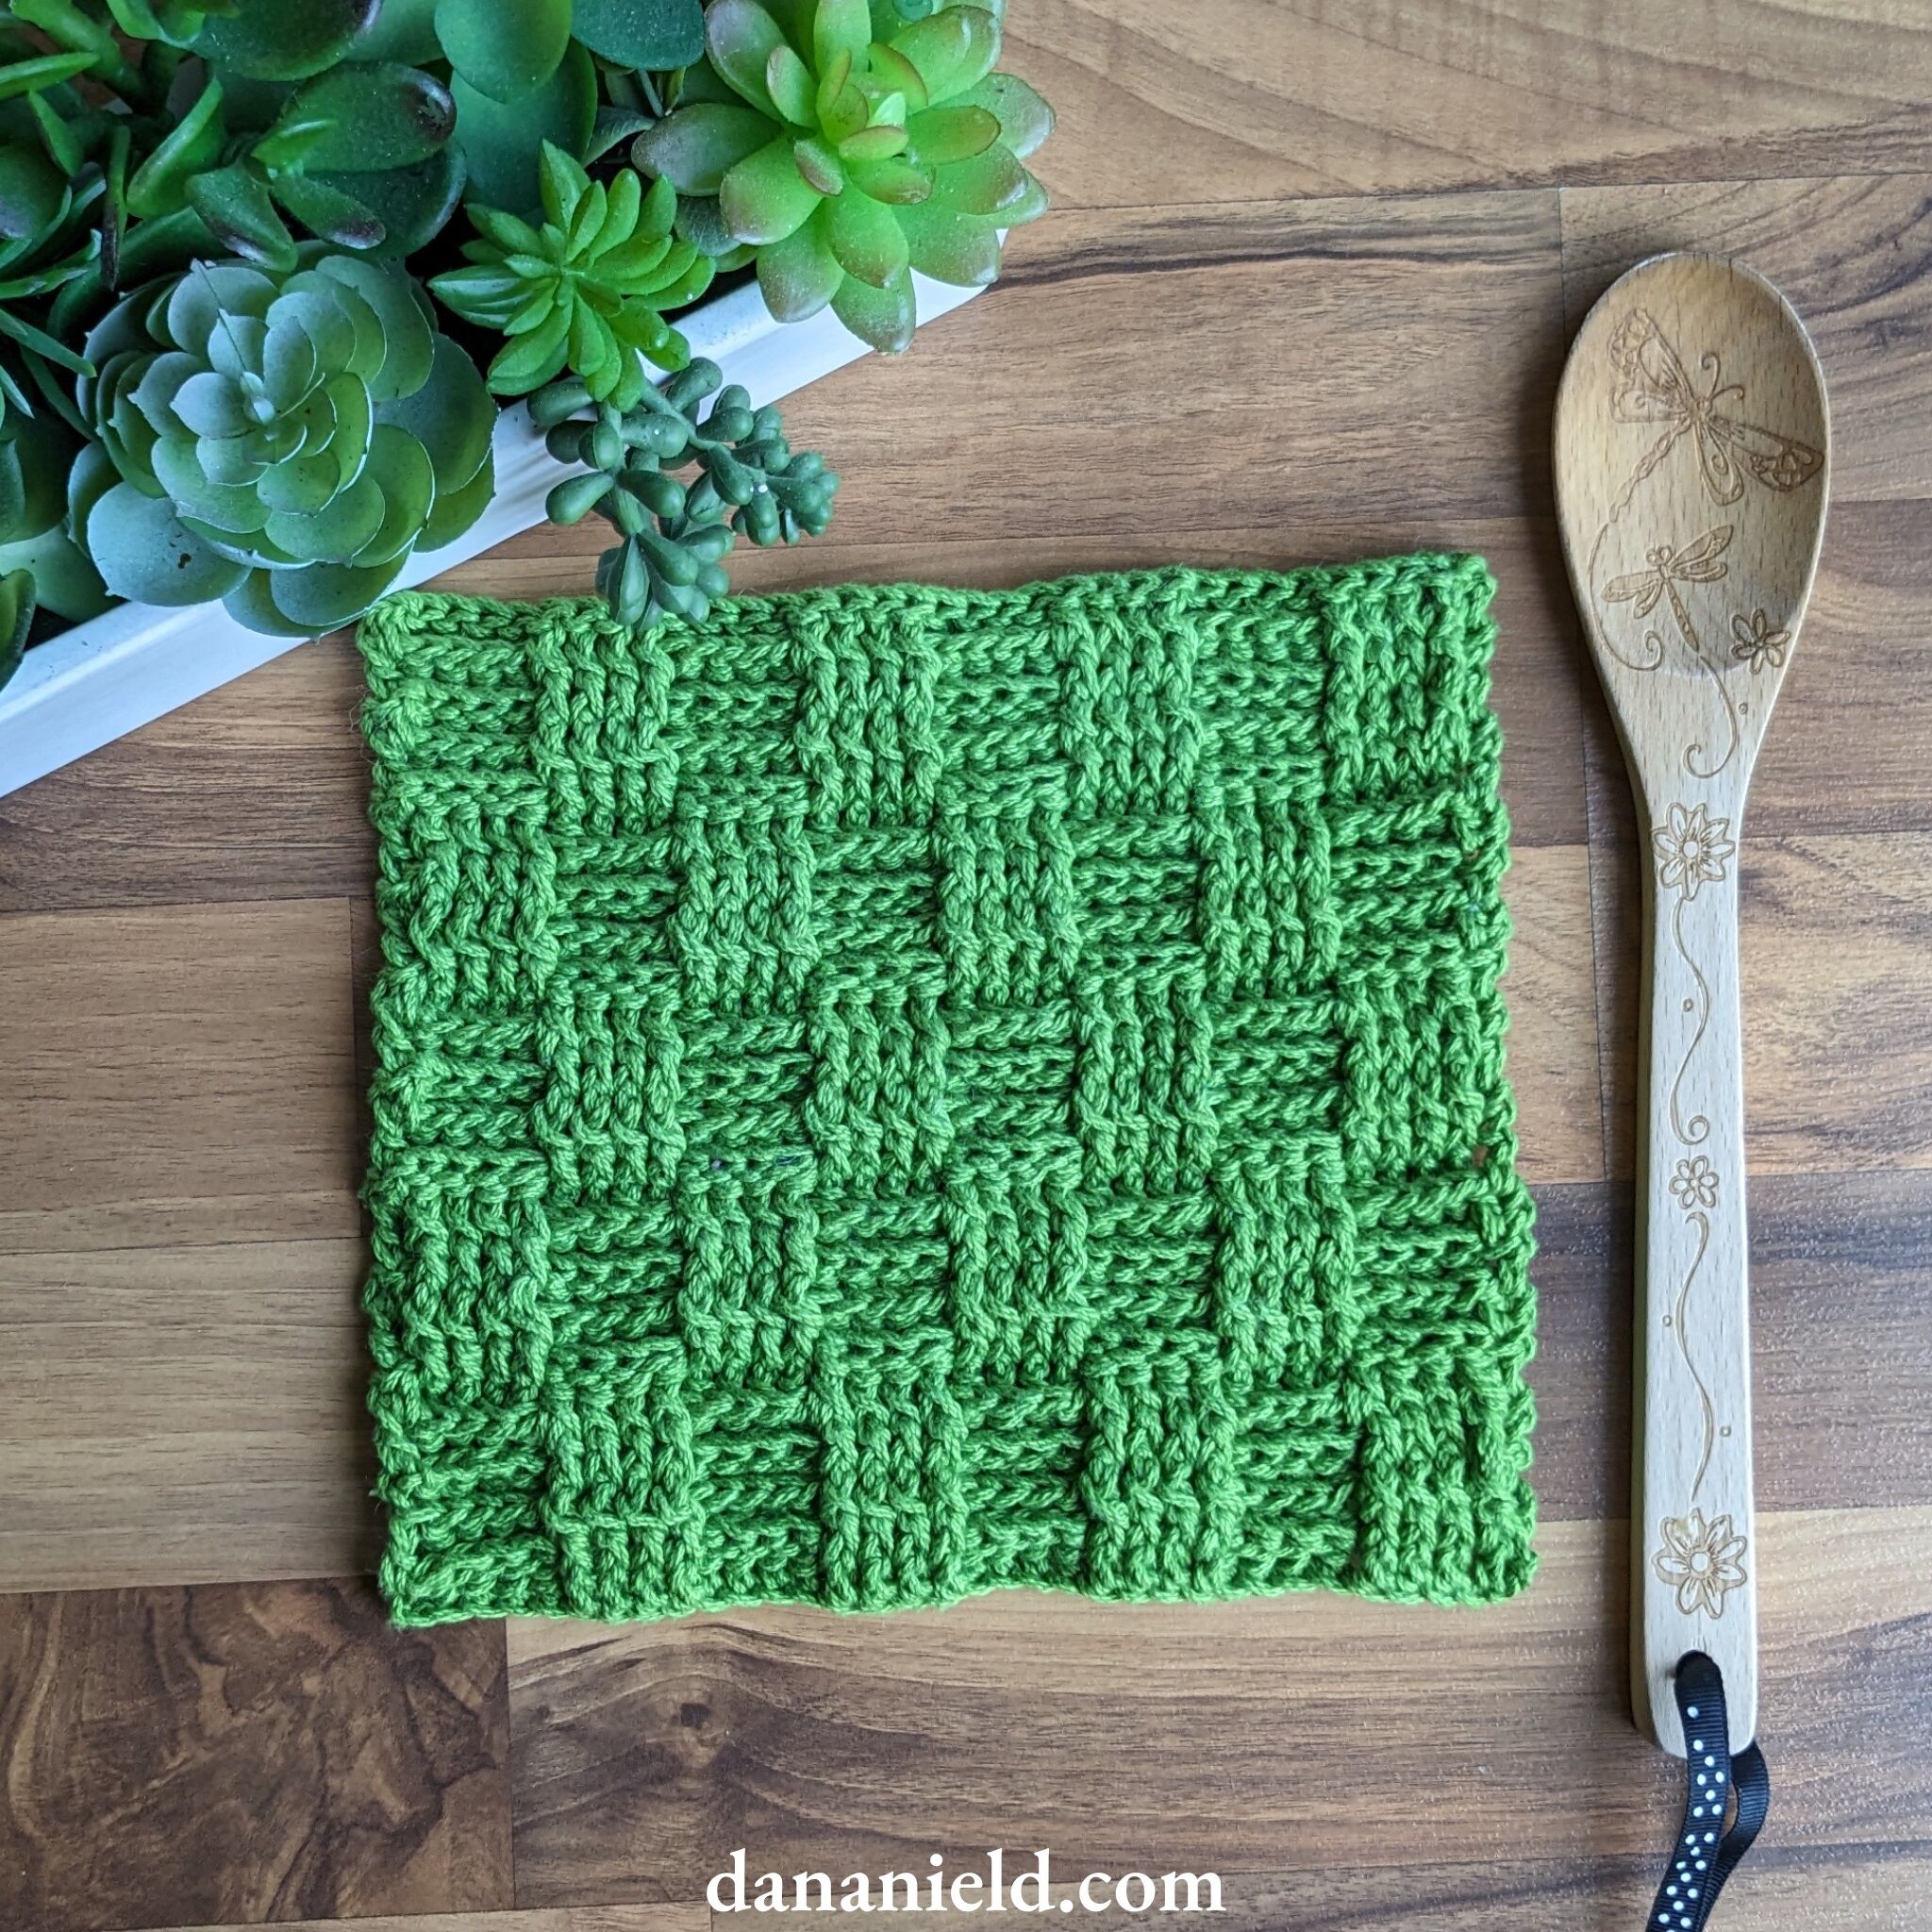 Crochet Patterns Galore - Basketweave Crochet Dishcloth